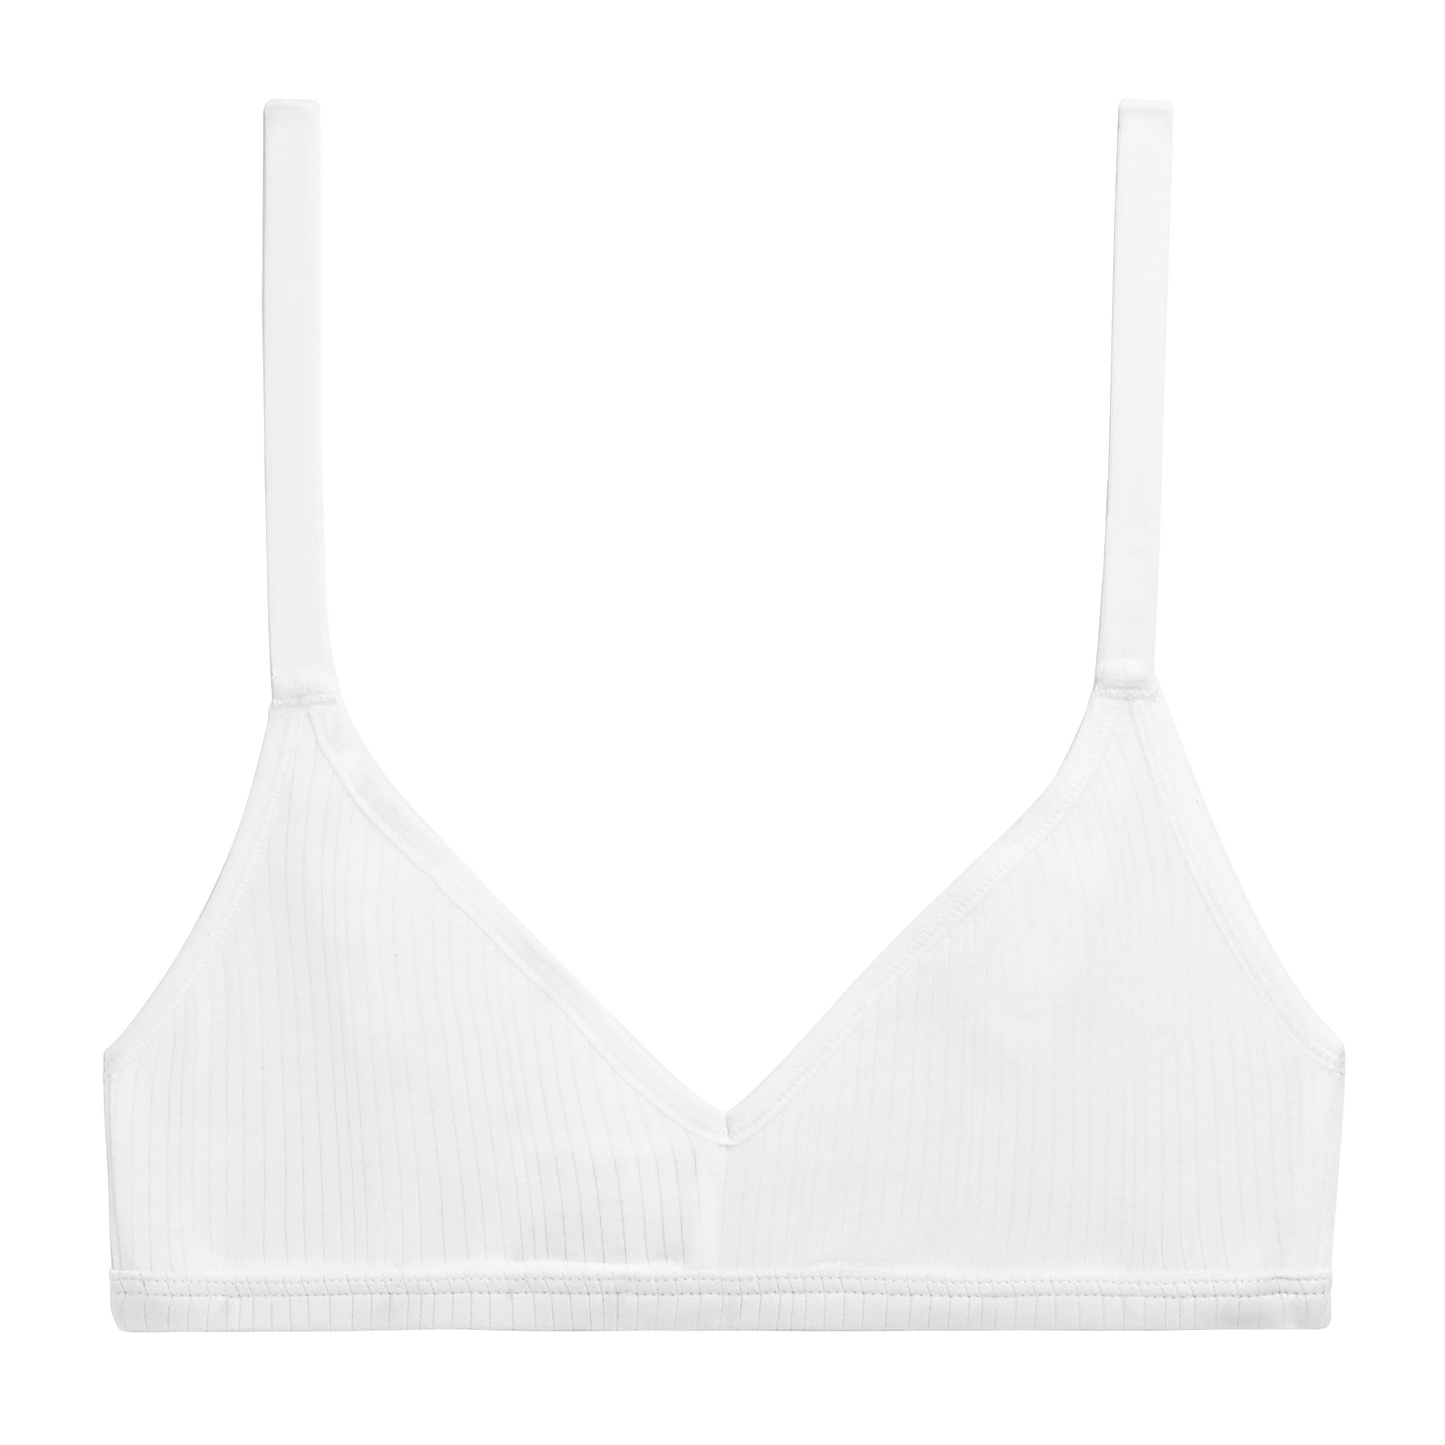 Whipped Non-Wire Bra in White  Comfortable Lounge Bralette - Women's Bras  – Negative Underwear